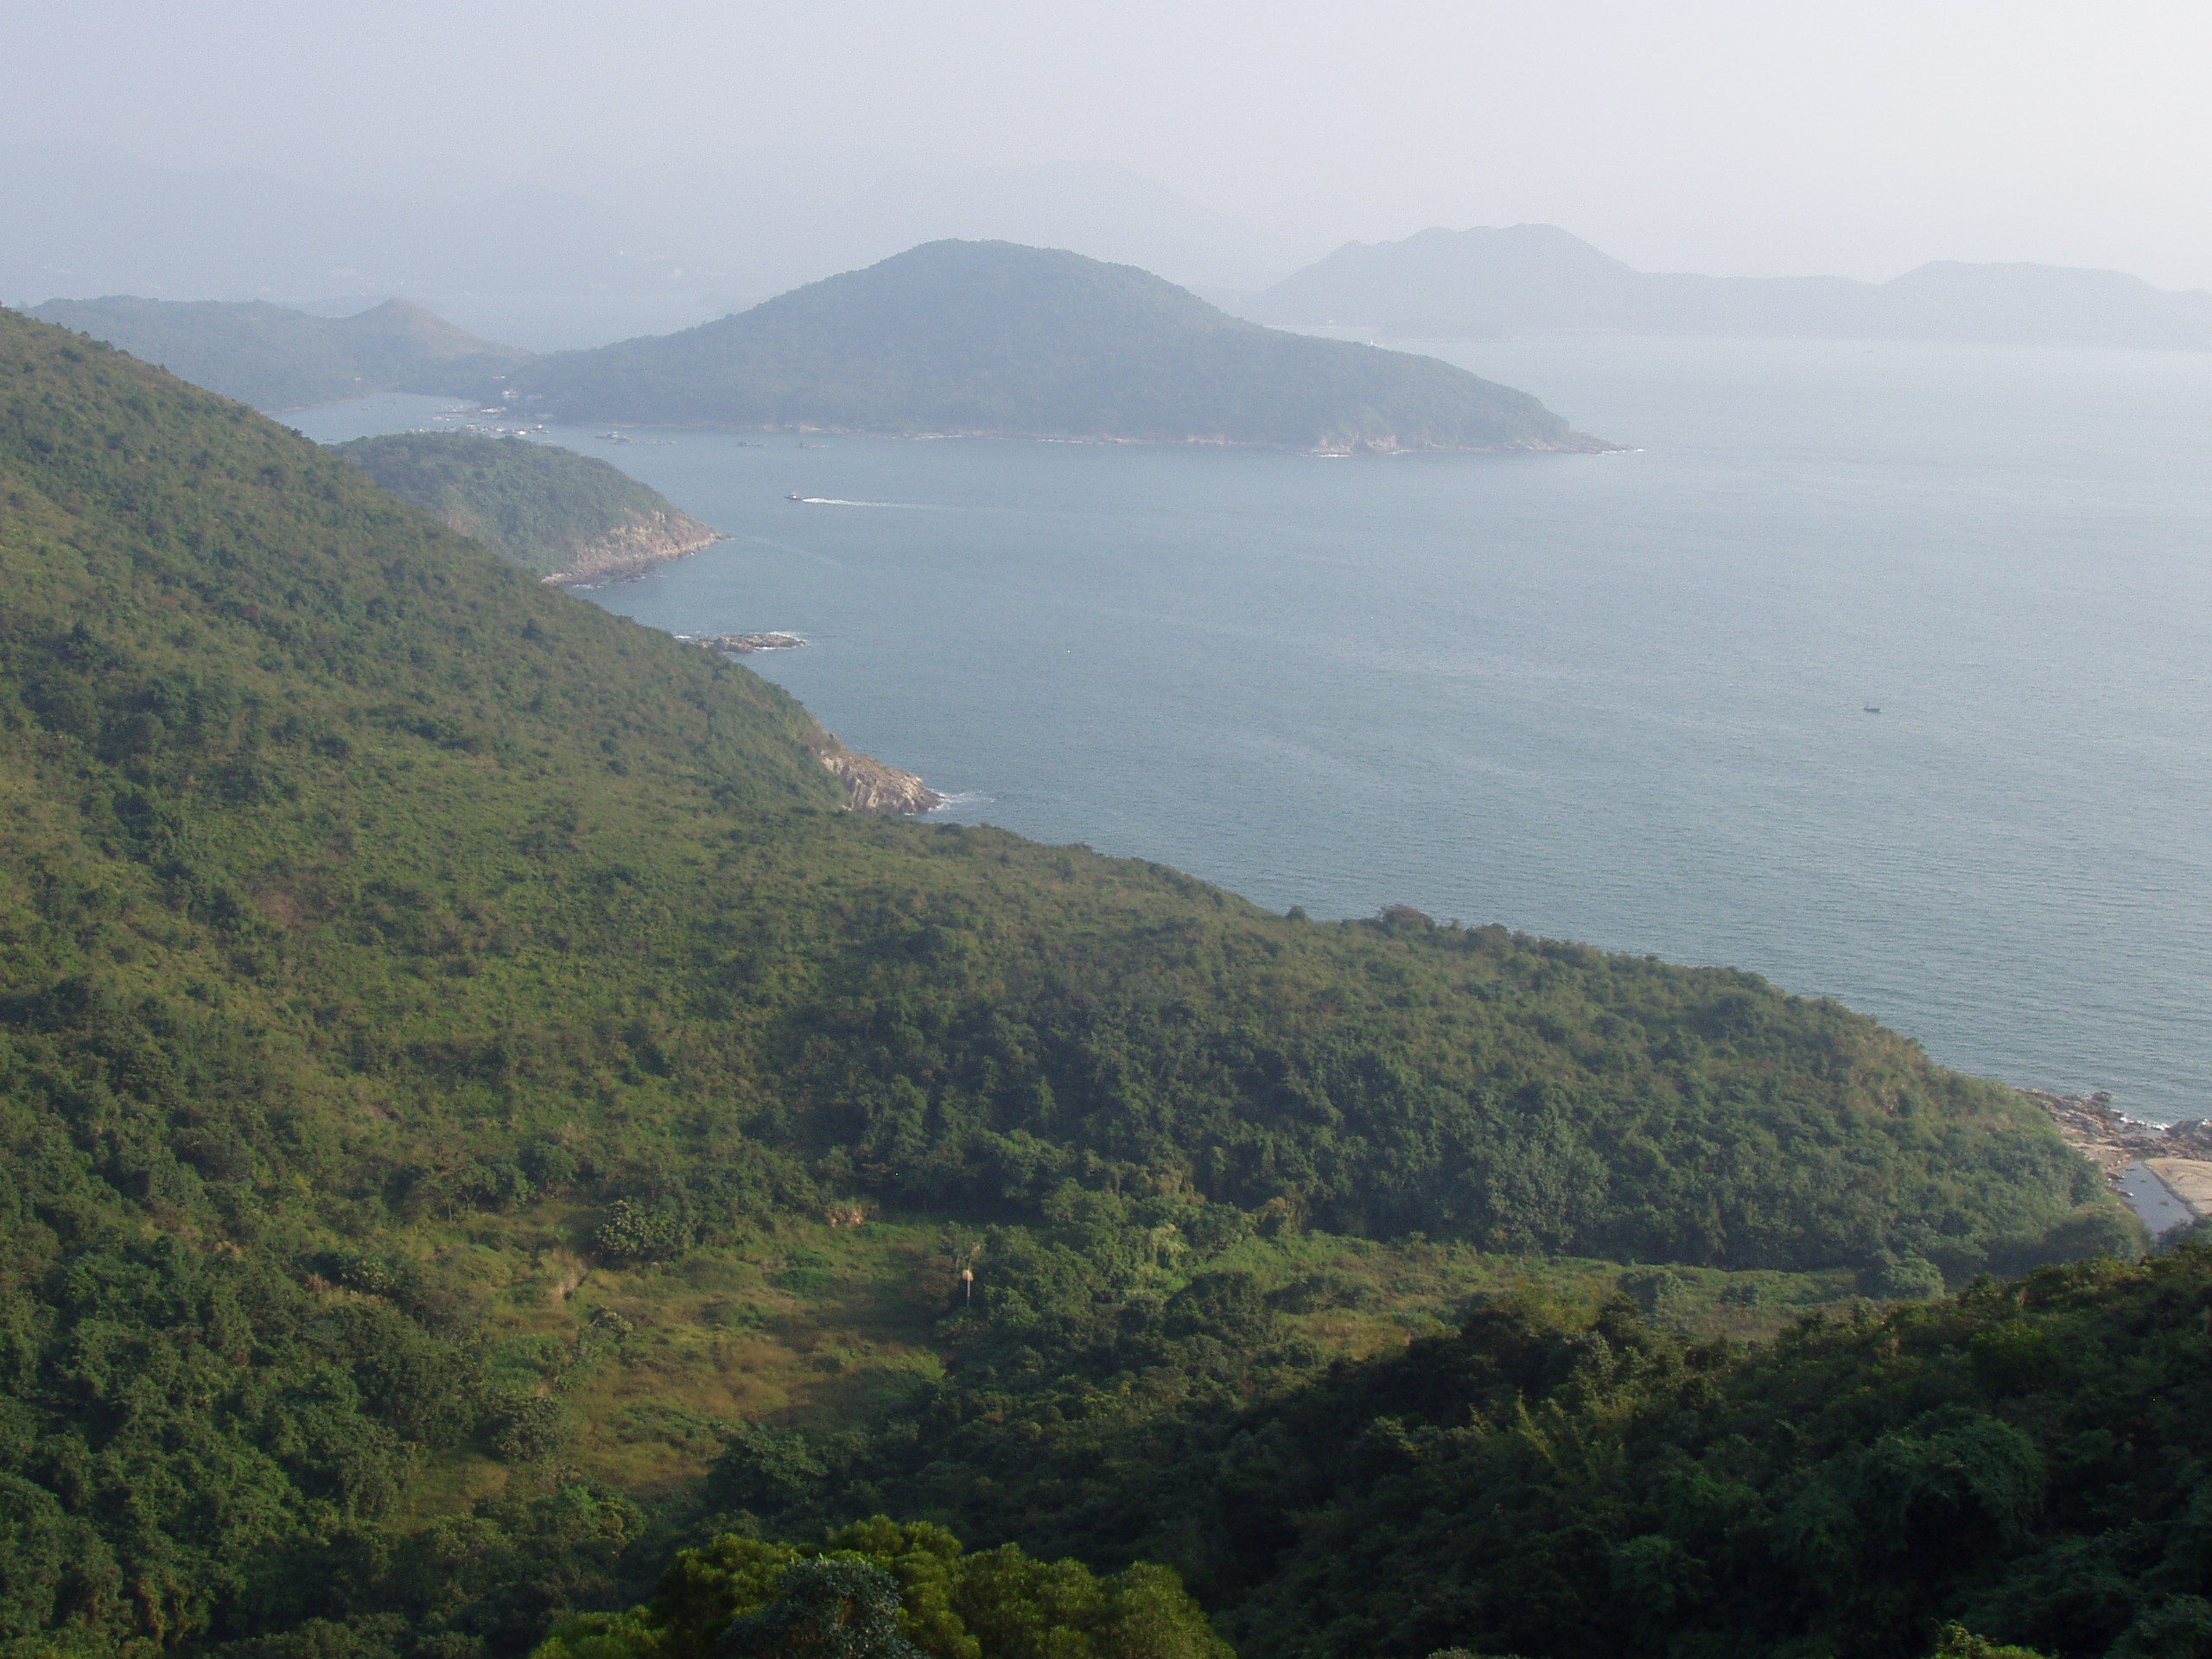 View of Hong Kong Bay from my apartment